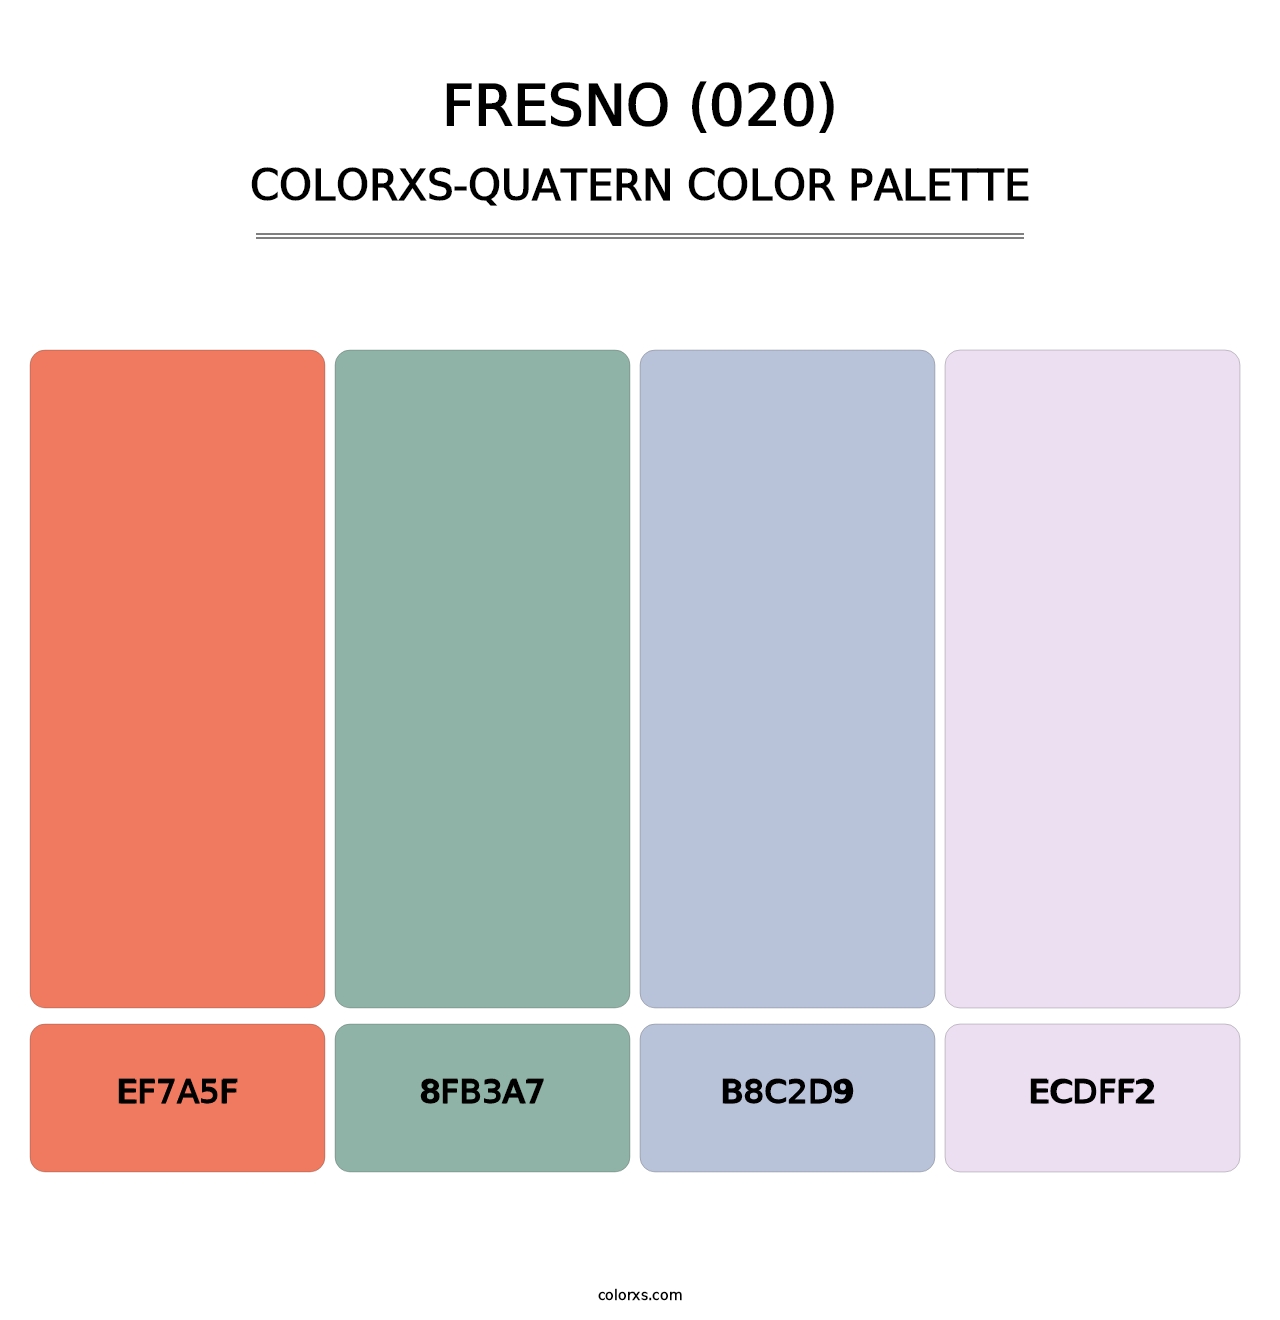 Fresno (020) - Colorxs Quatern Palette